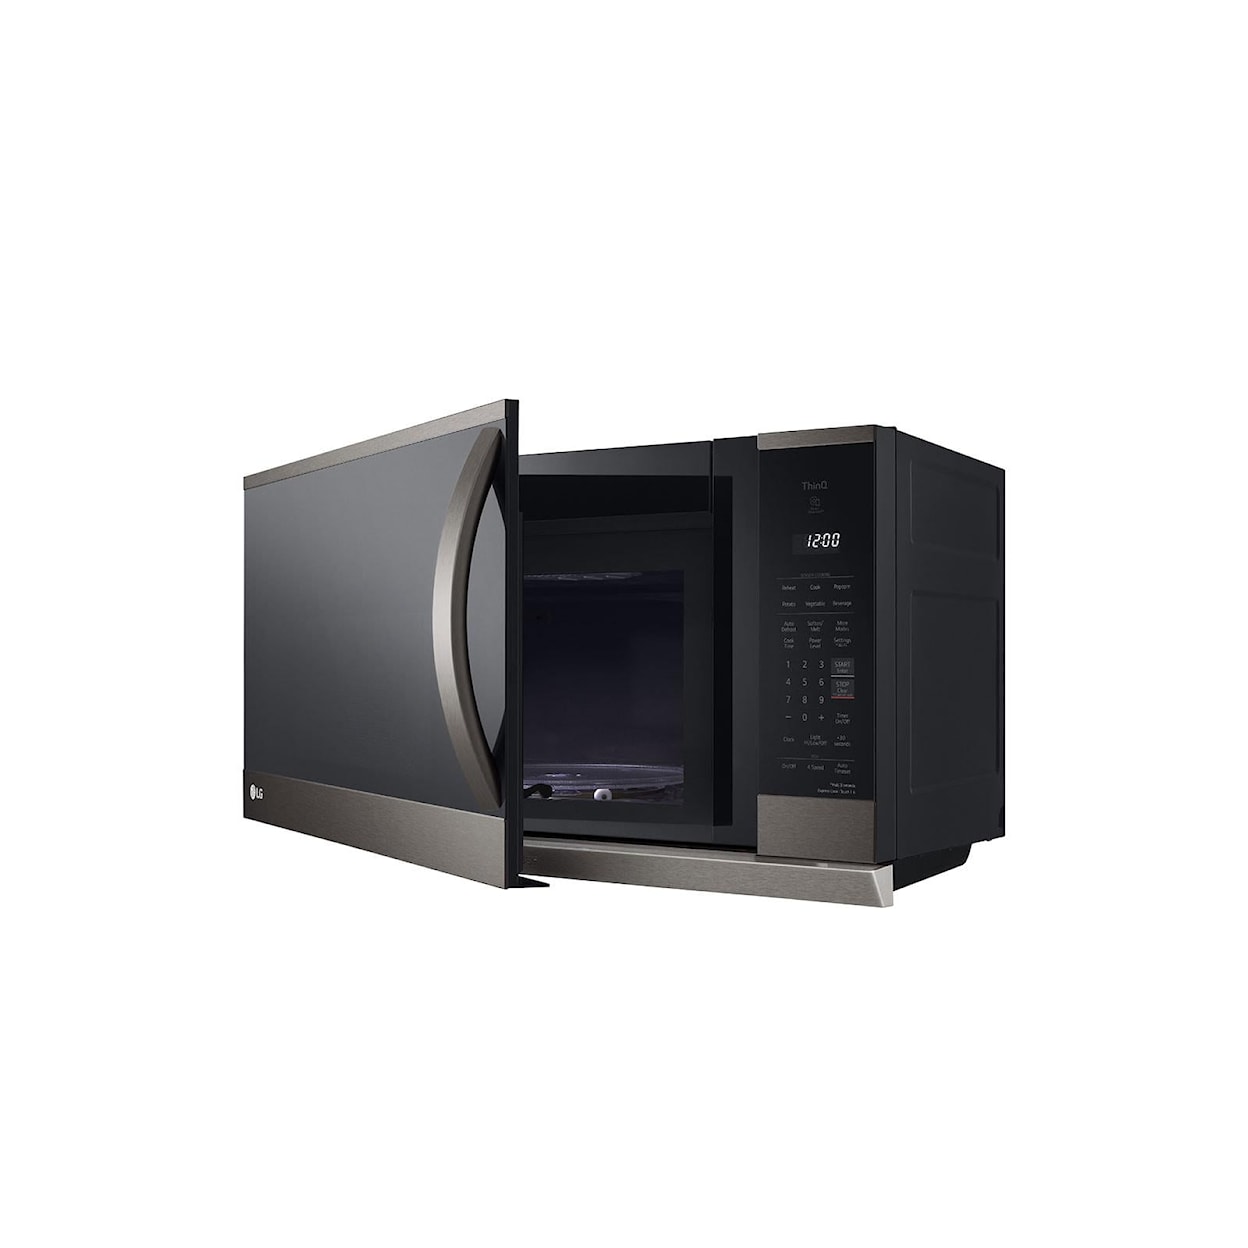 LG Appliances Microwave Over The Range Microwave